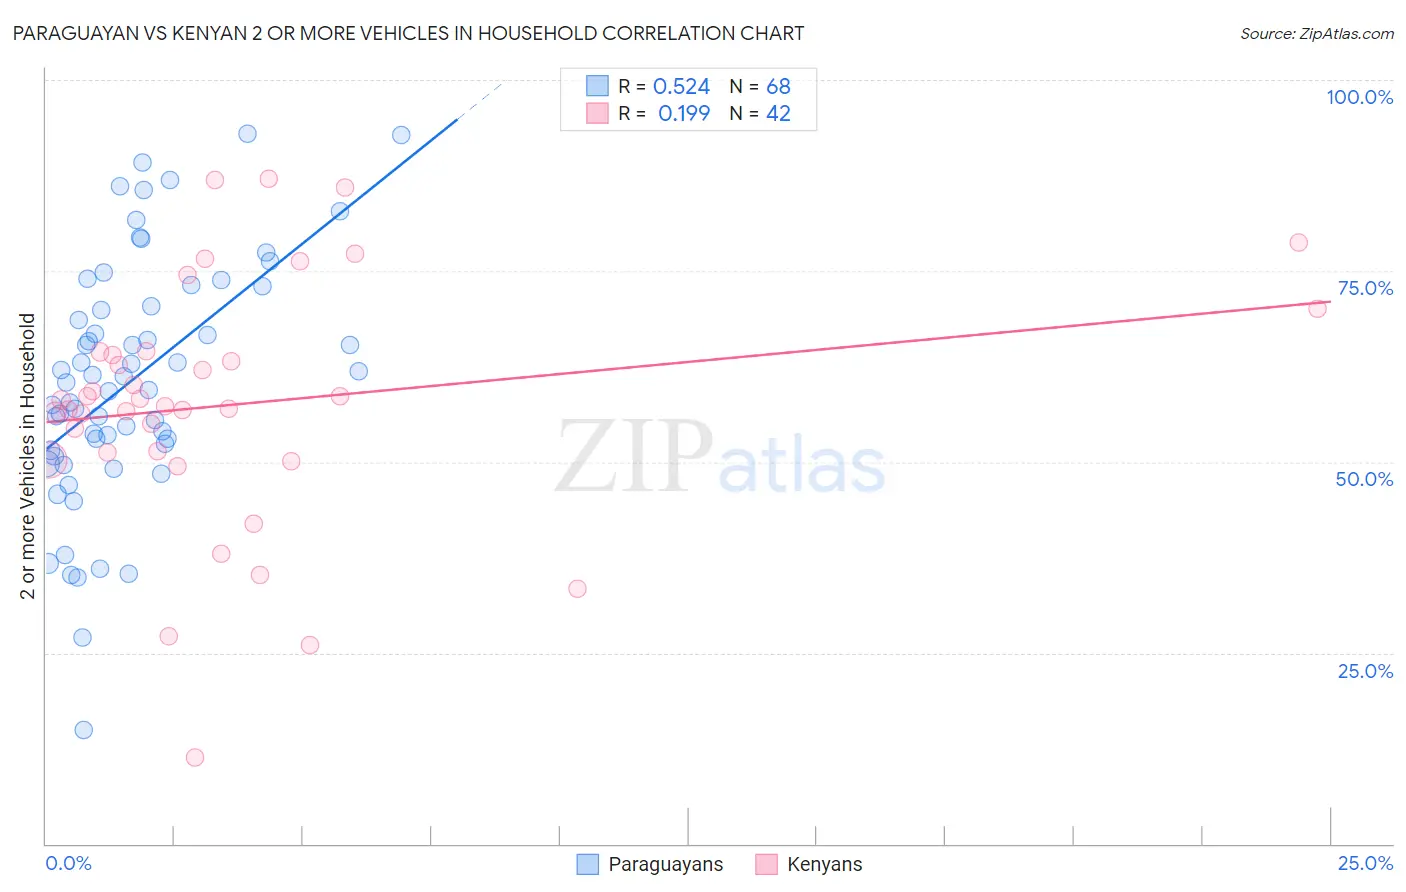 Paraguayan vs Kenyan 2 or more Vehicles in Household